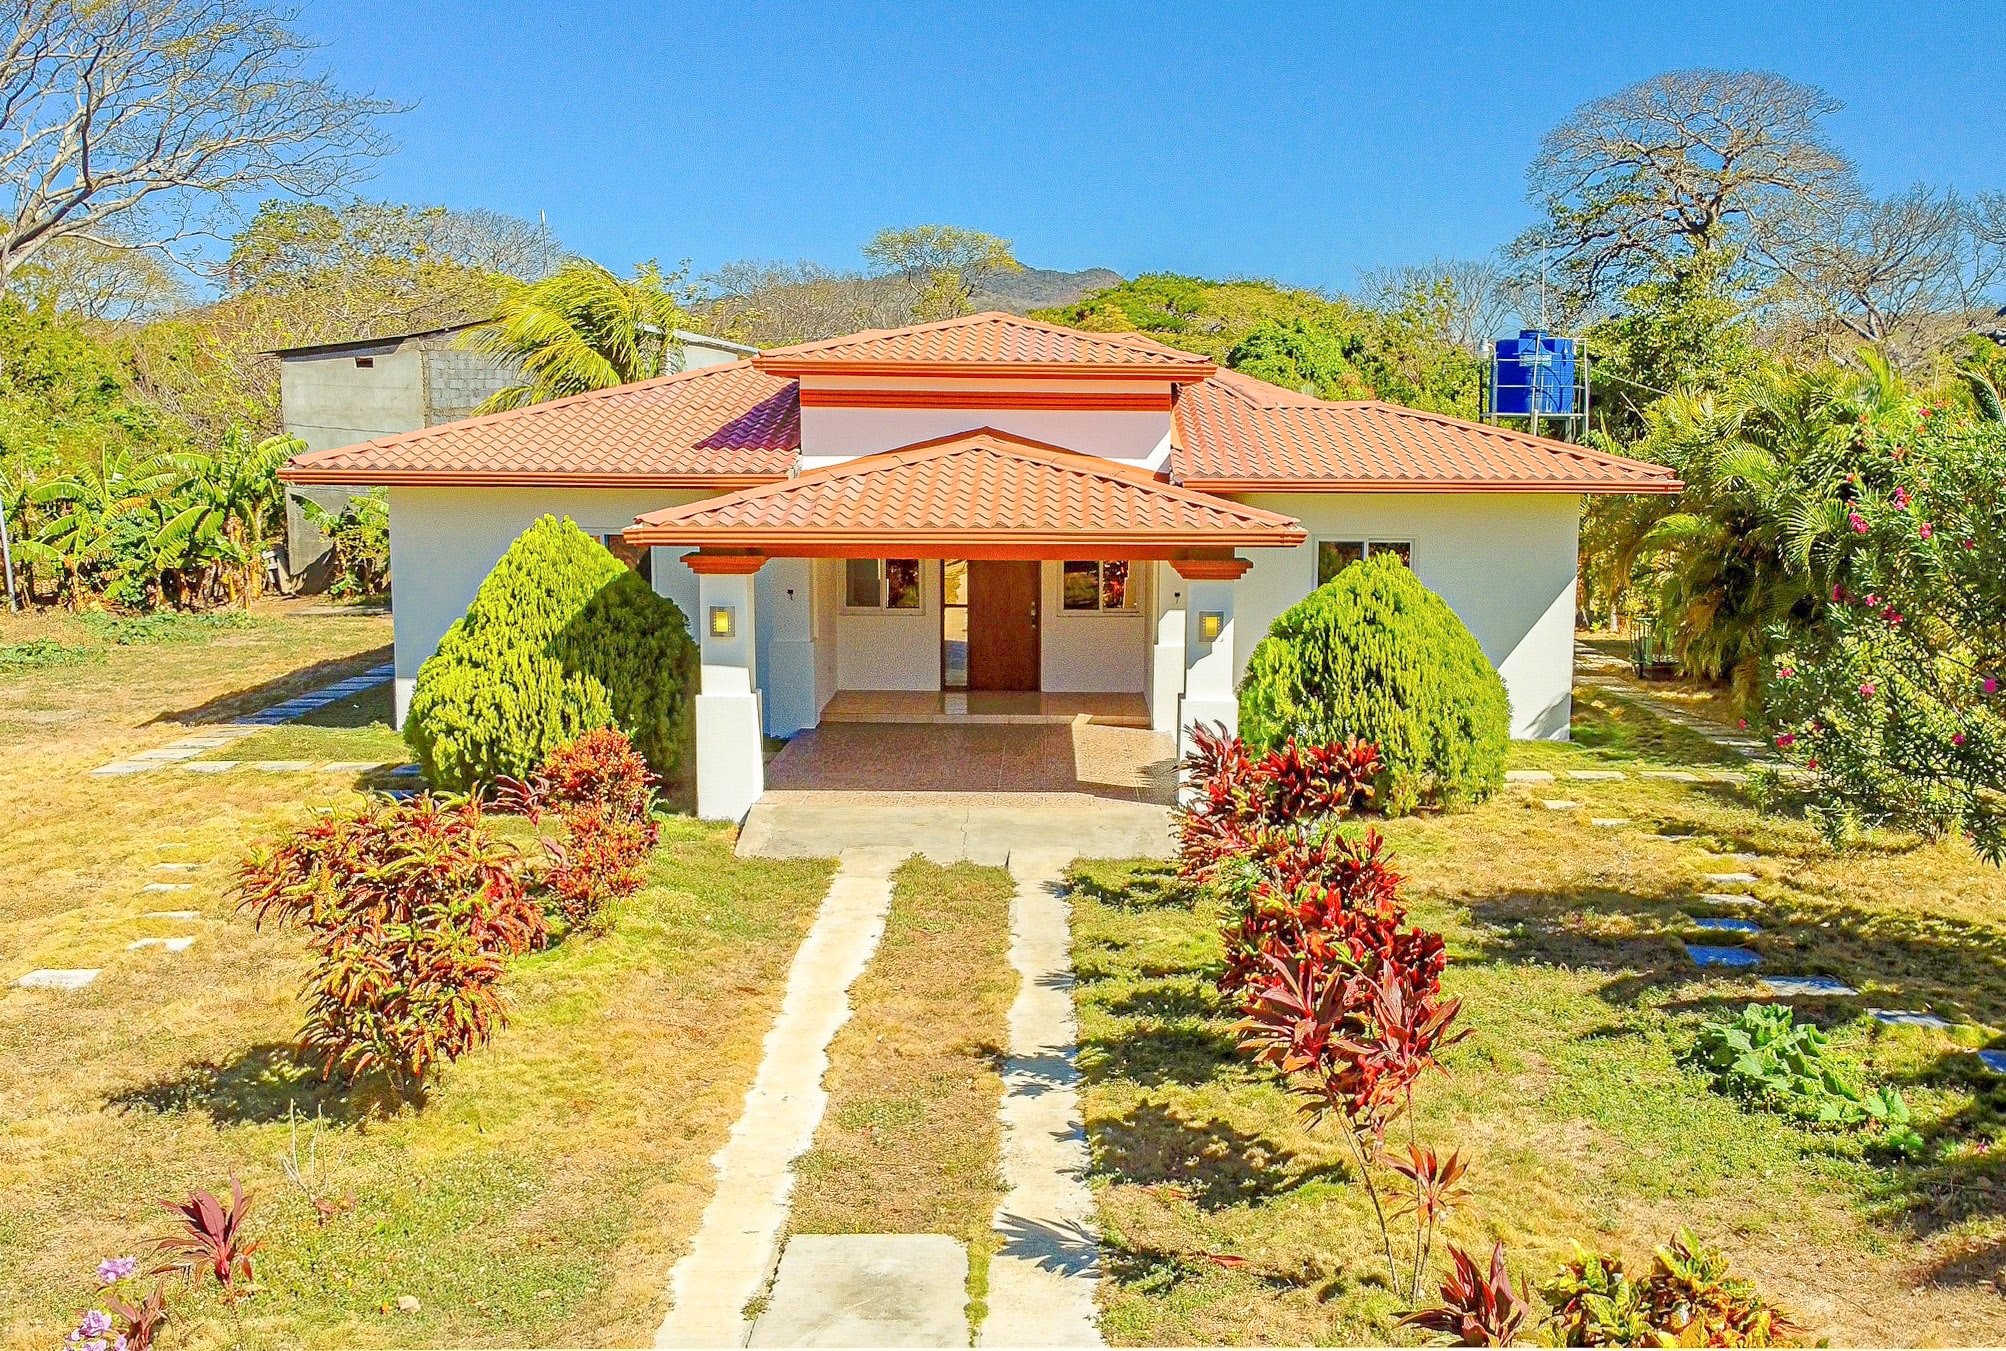 Two Homes on on Acre of Land San Juan Del Sur Nicaragua Real Estate 20221.jpg